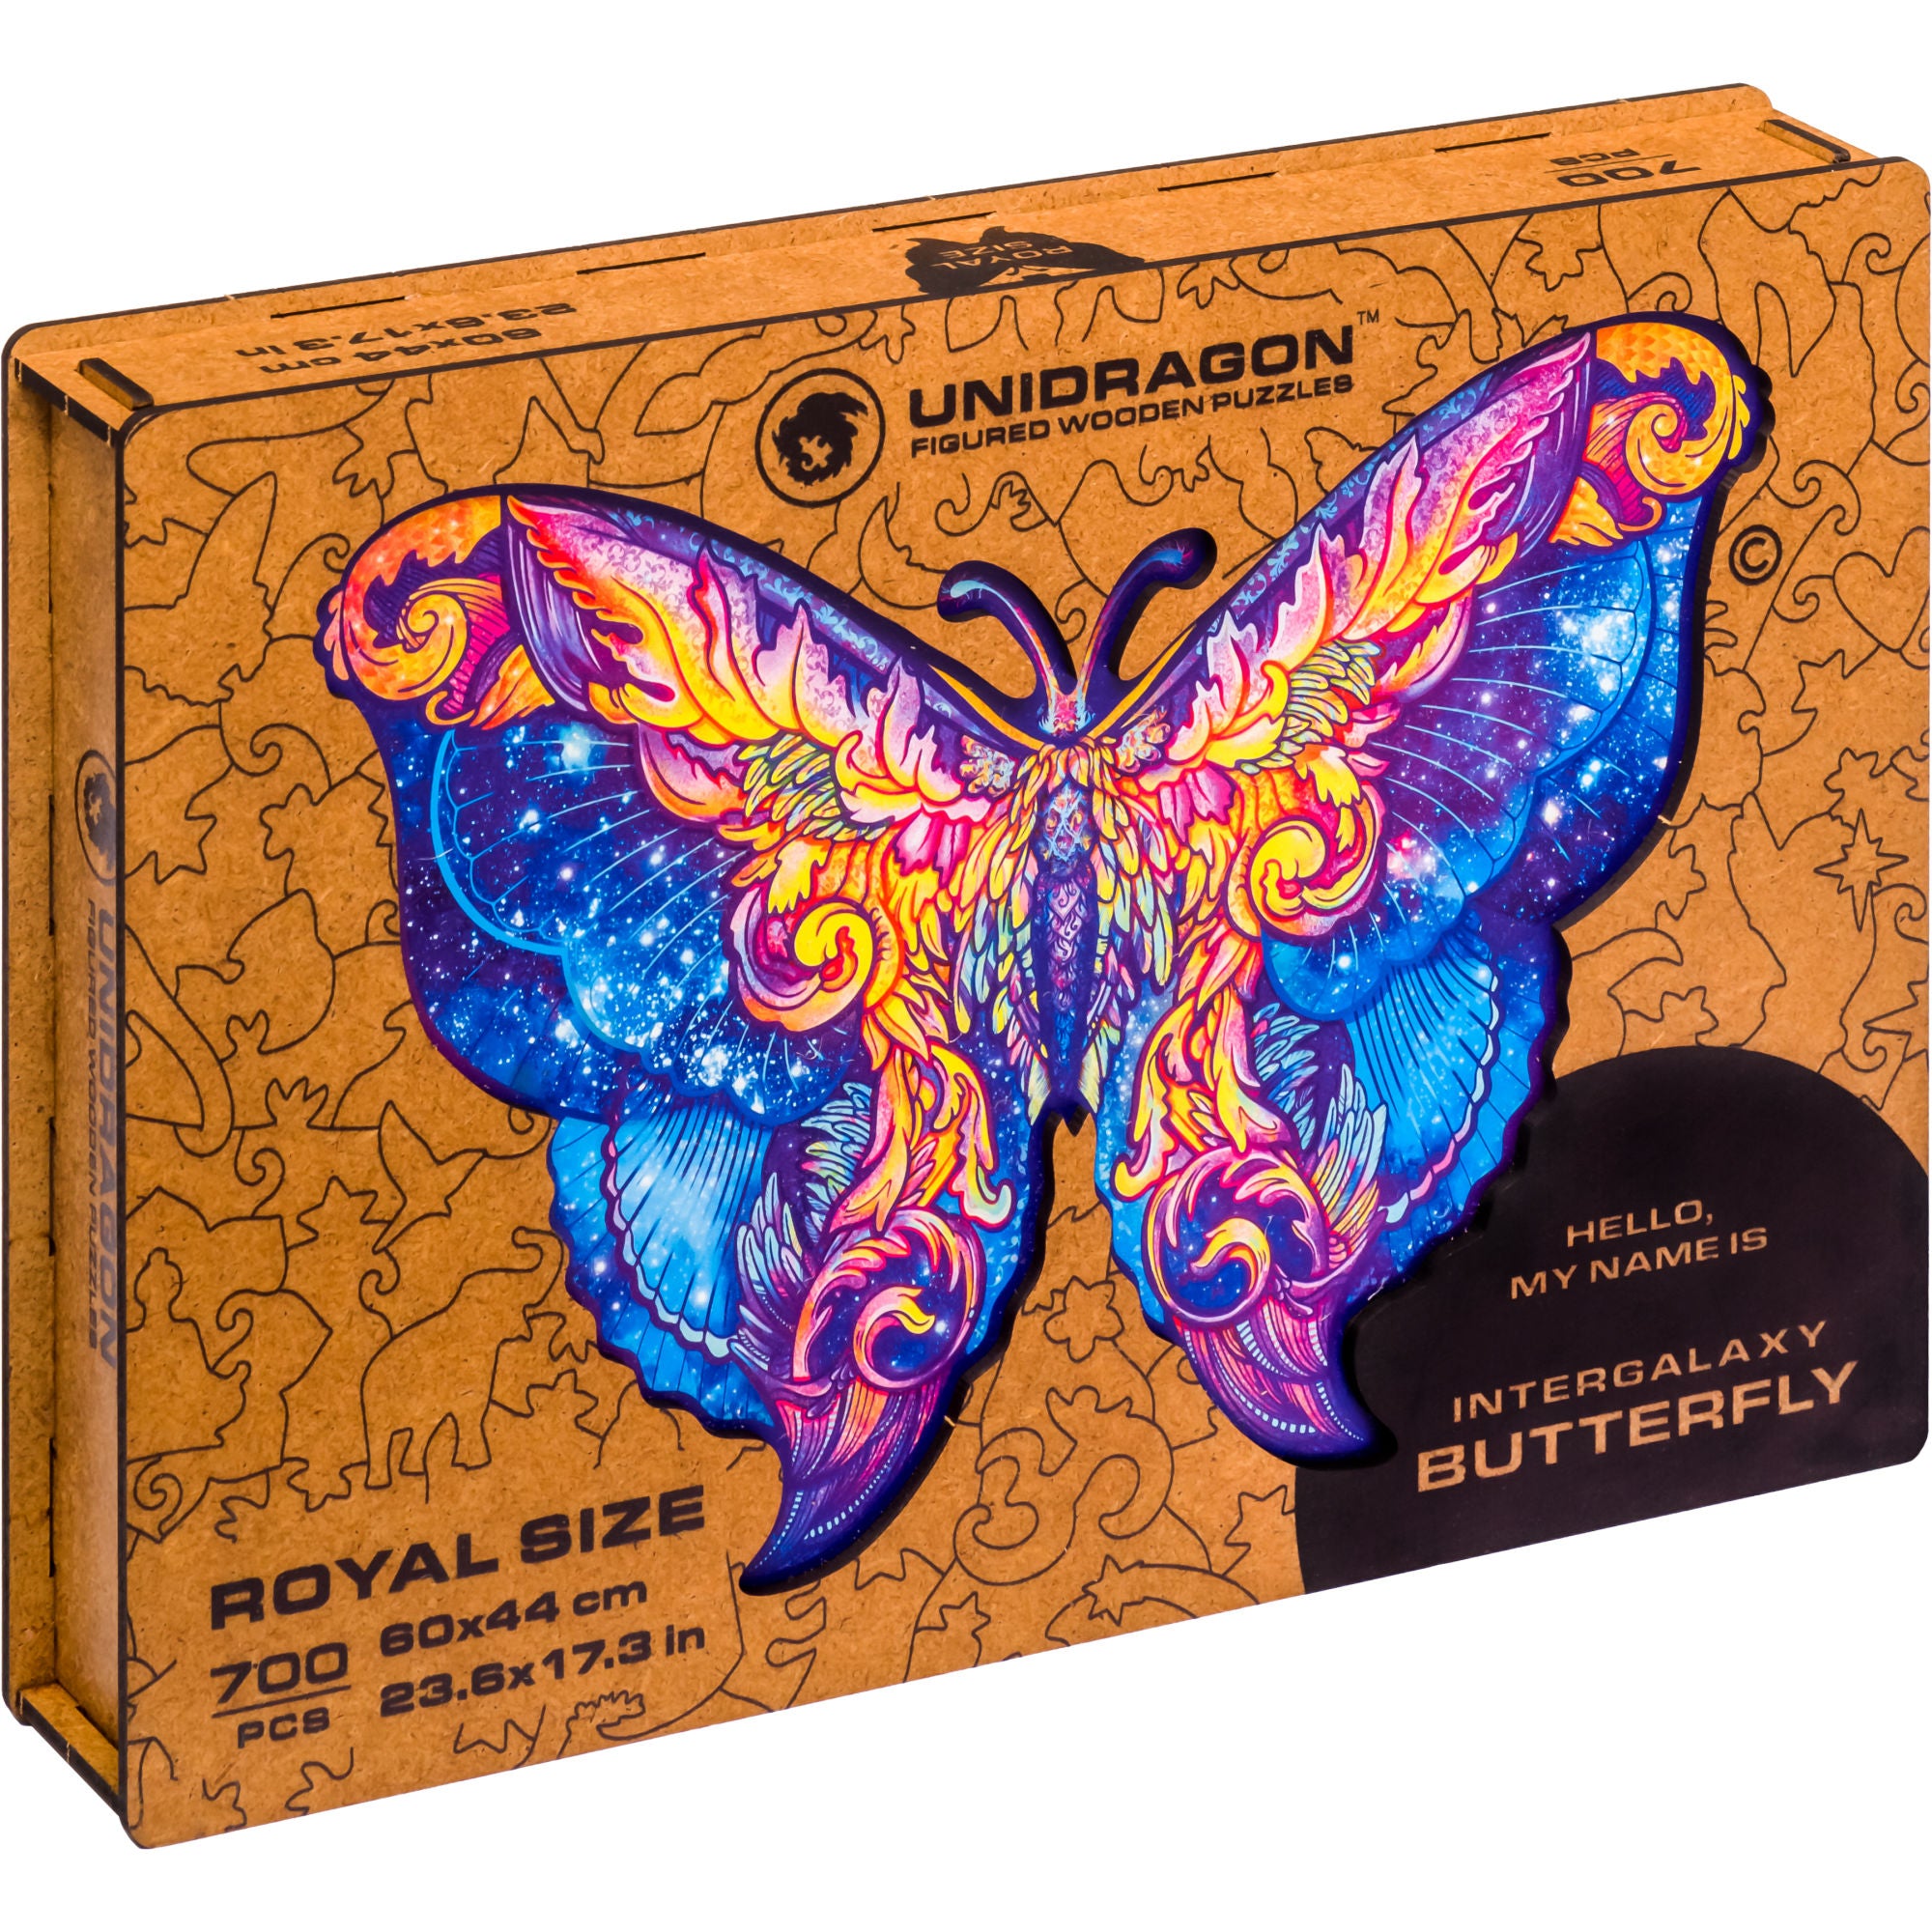 UNIDRAGON Houten Puzzel Dier - Intersterrenstelsel Vlinder - Royal Size - 60 x 44 cm image 12